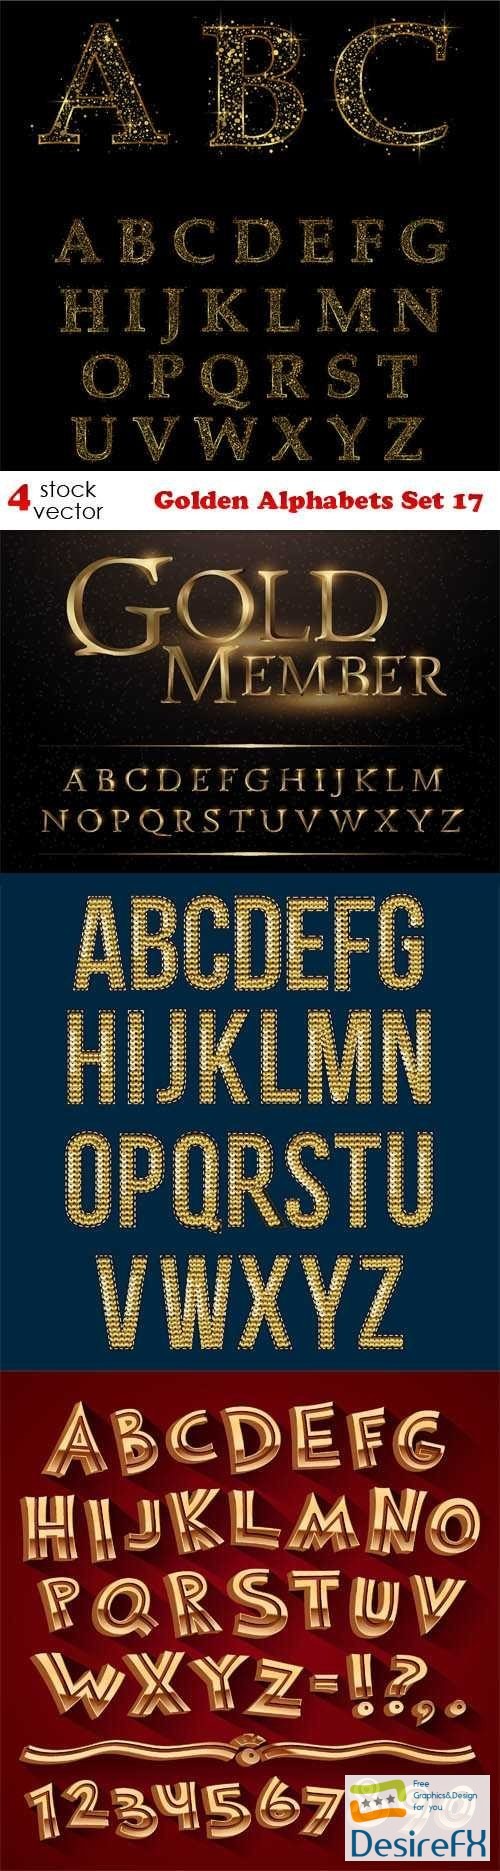 Golden Alphabets Set 17